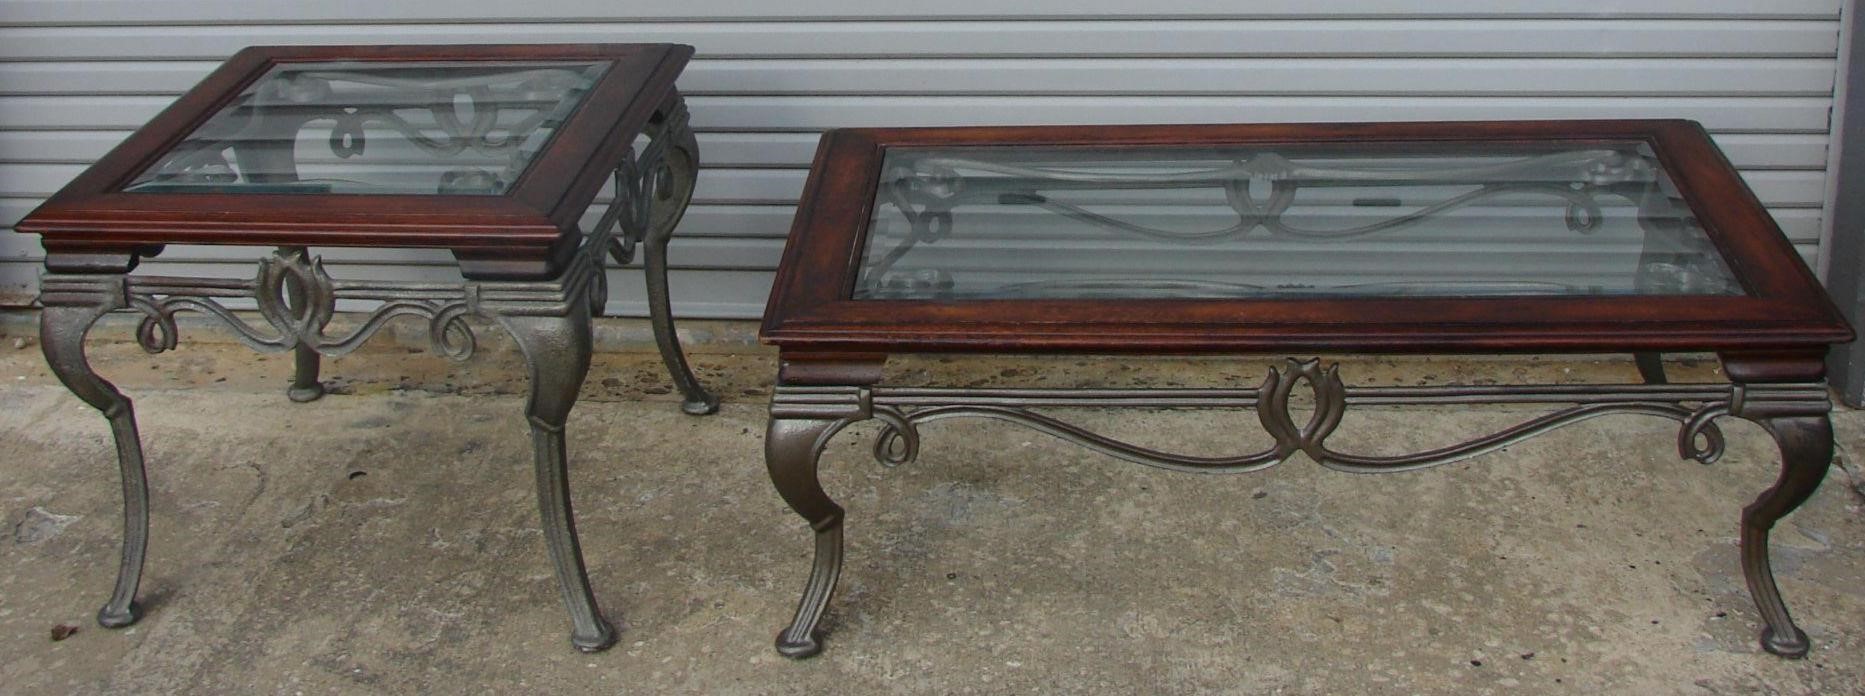 Cofffee & Side tables wood/glass/ornate metal legs